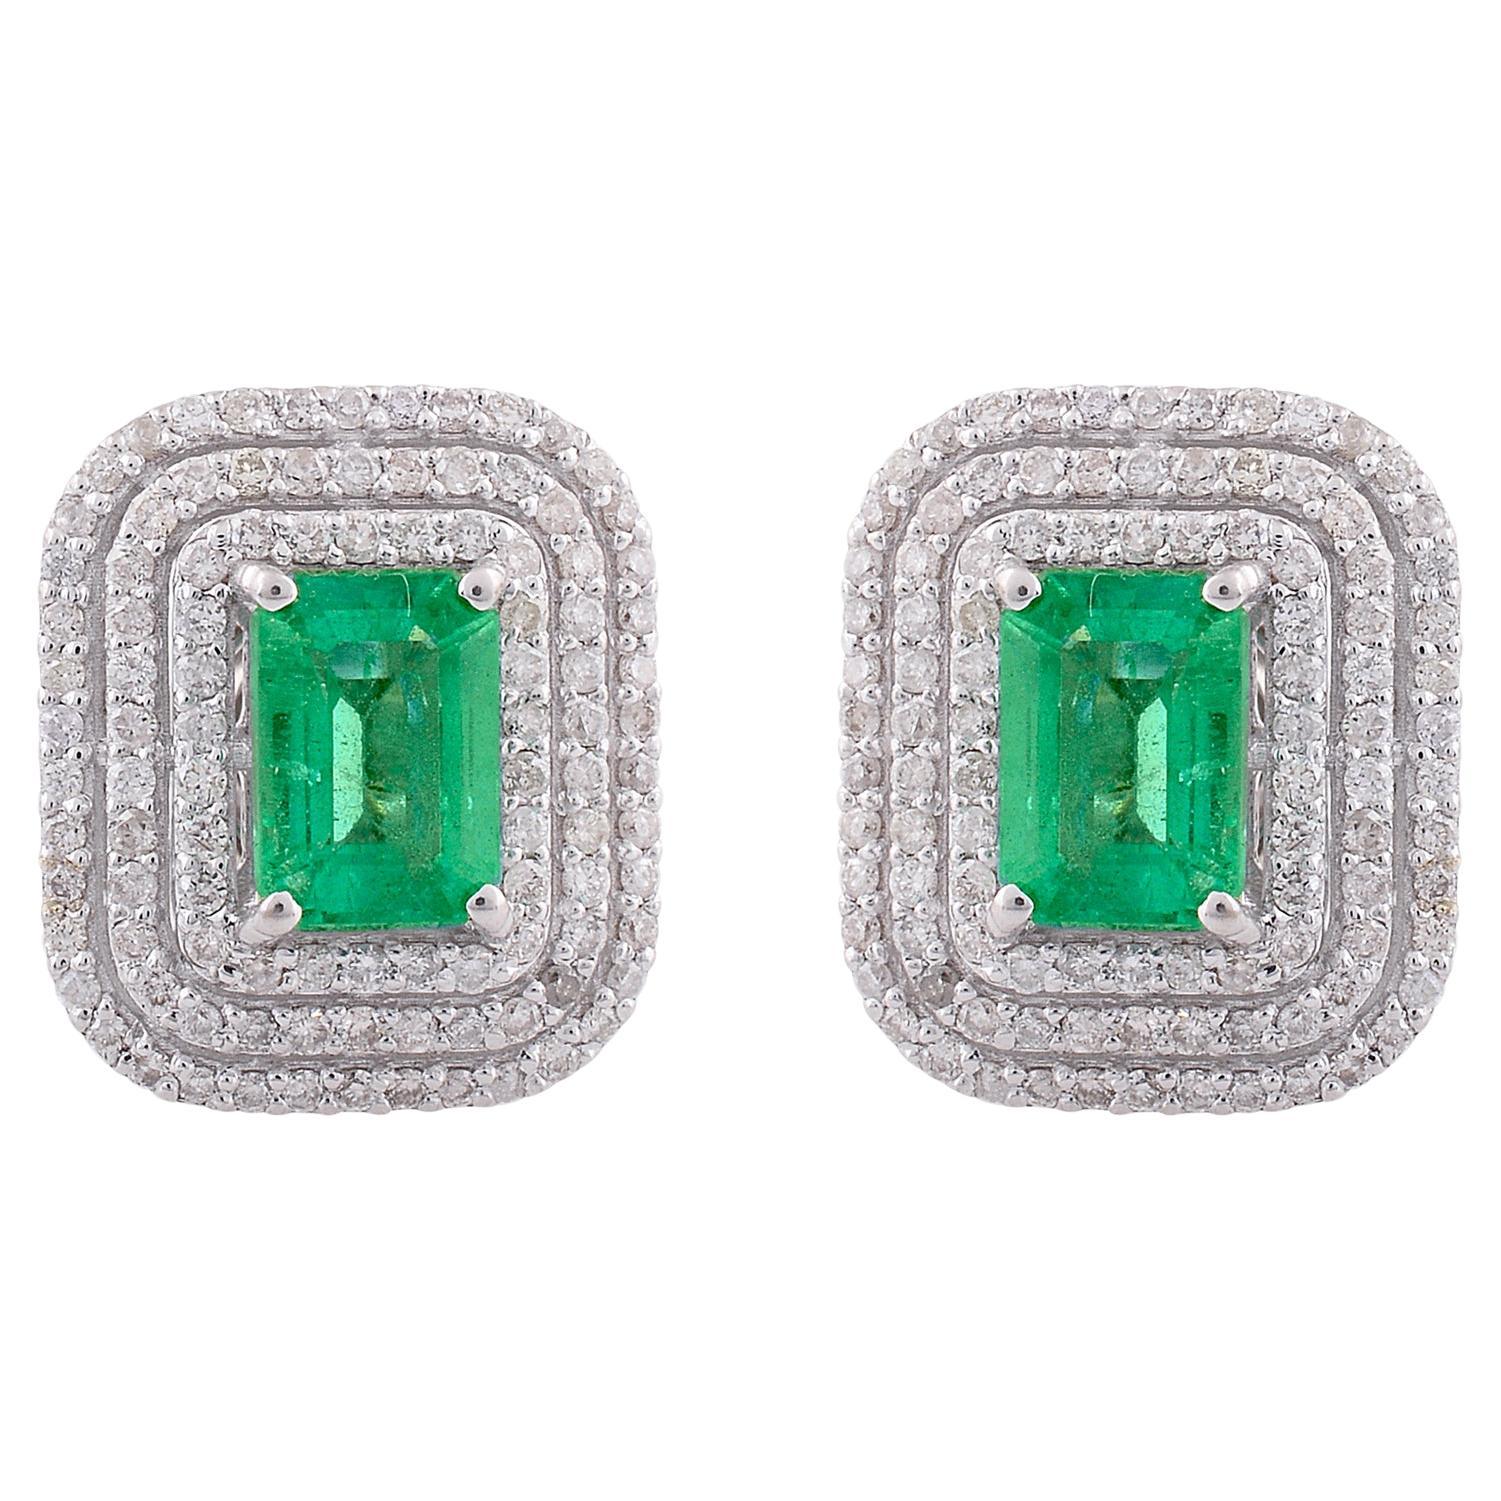 Zambian Emerald Gemstone Stud Earrings Diamond Pave Solid 14k White Gold Jewelry